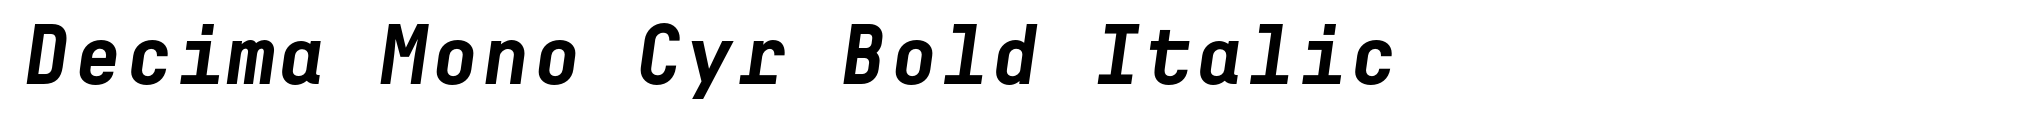 Decima Mono Cyr Bold Italic image